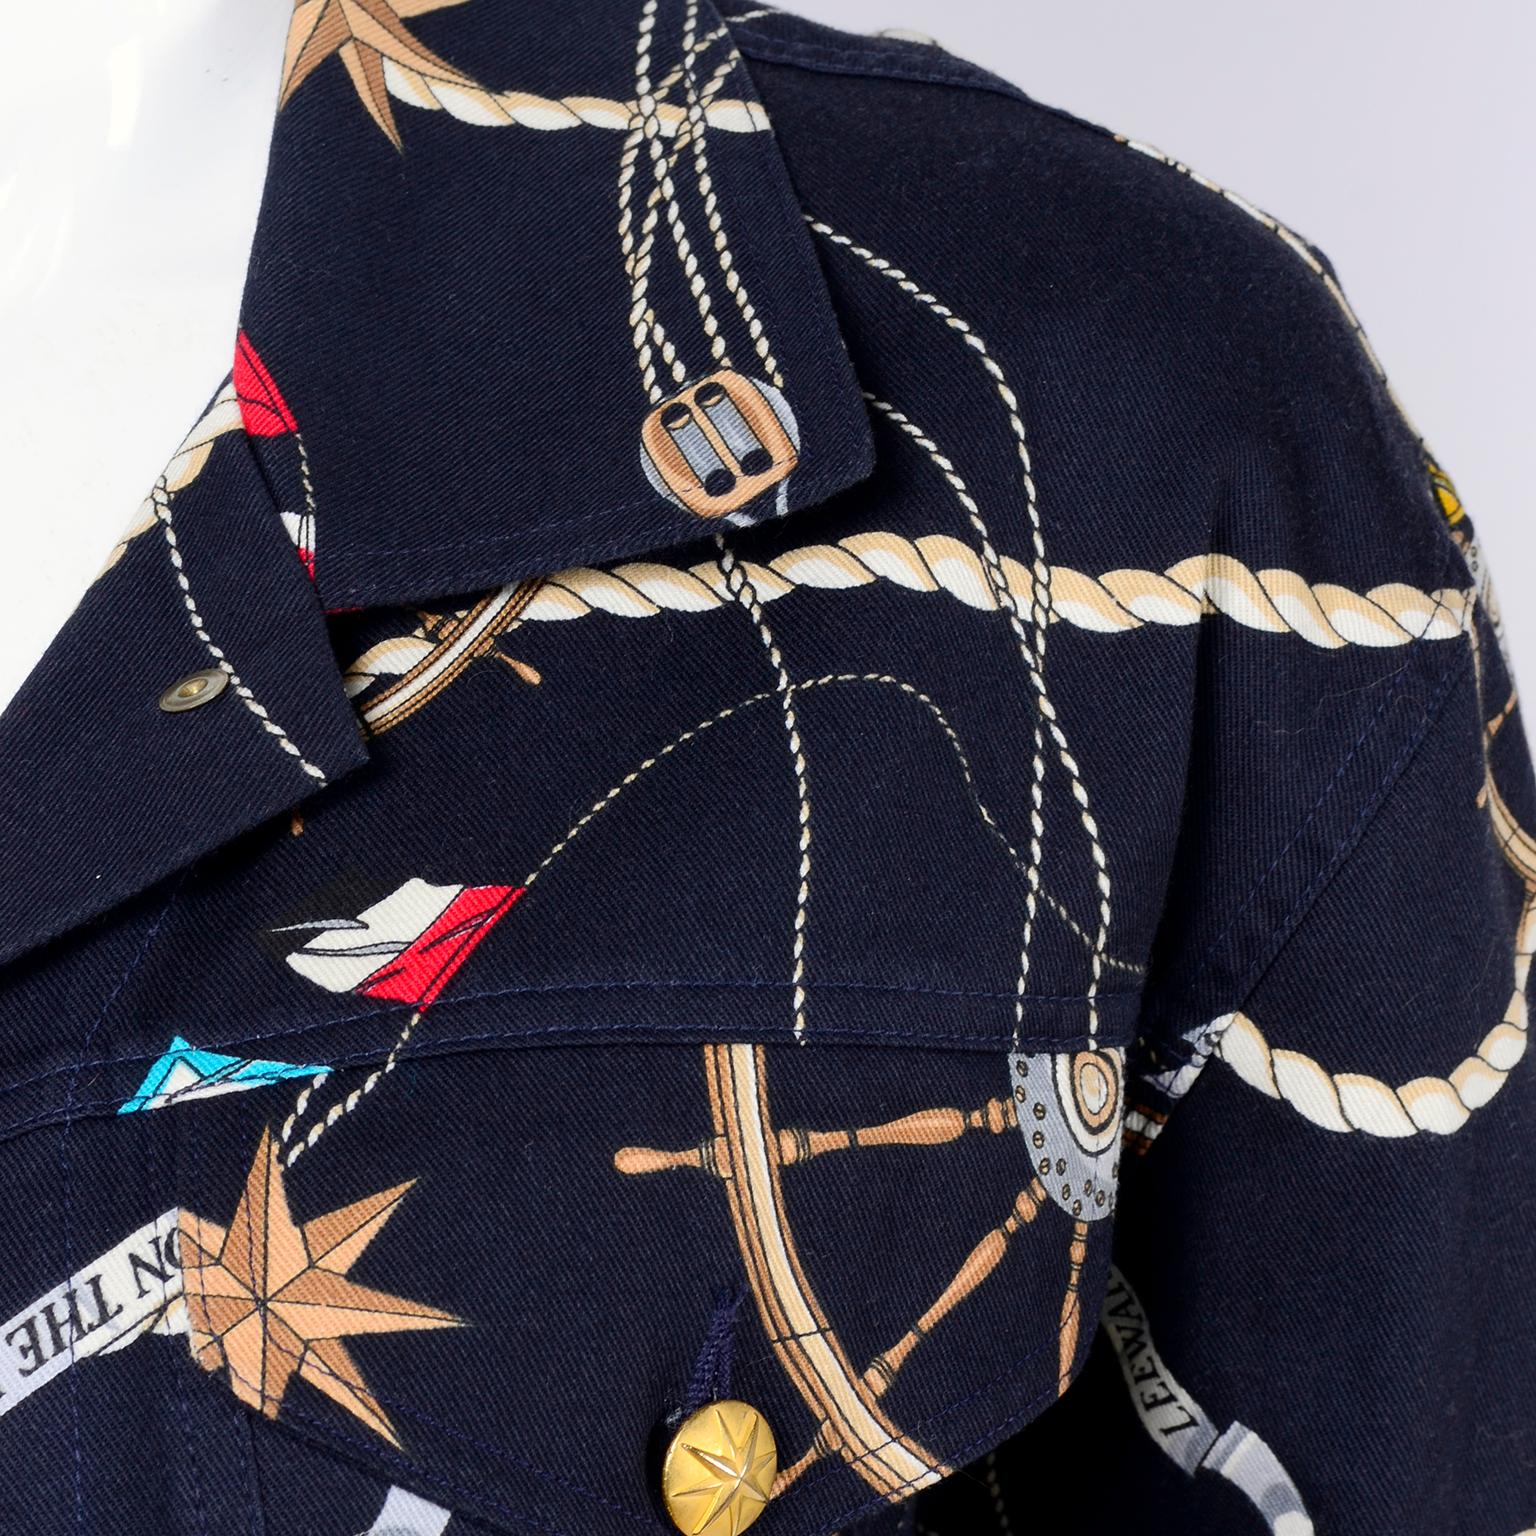 Mondi Vintage Skirt & Jacket in Black Denim Nautical Print W/ Gold Star Button 8